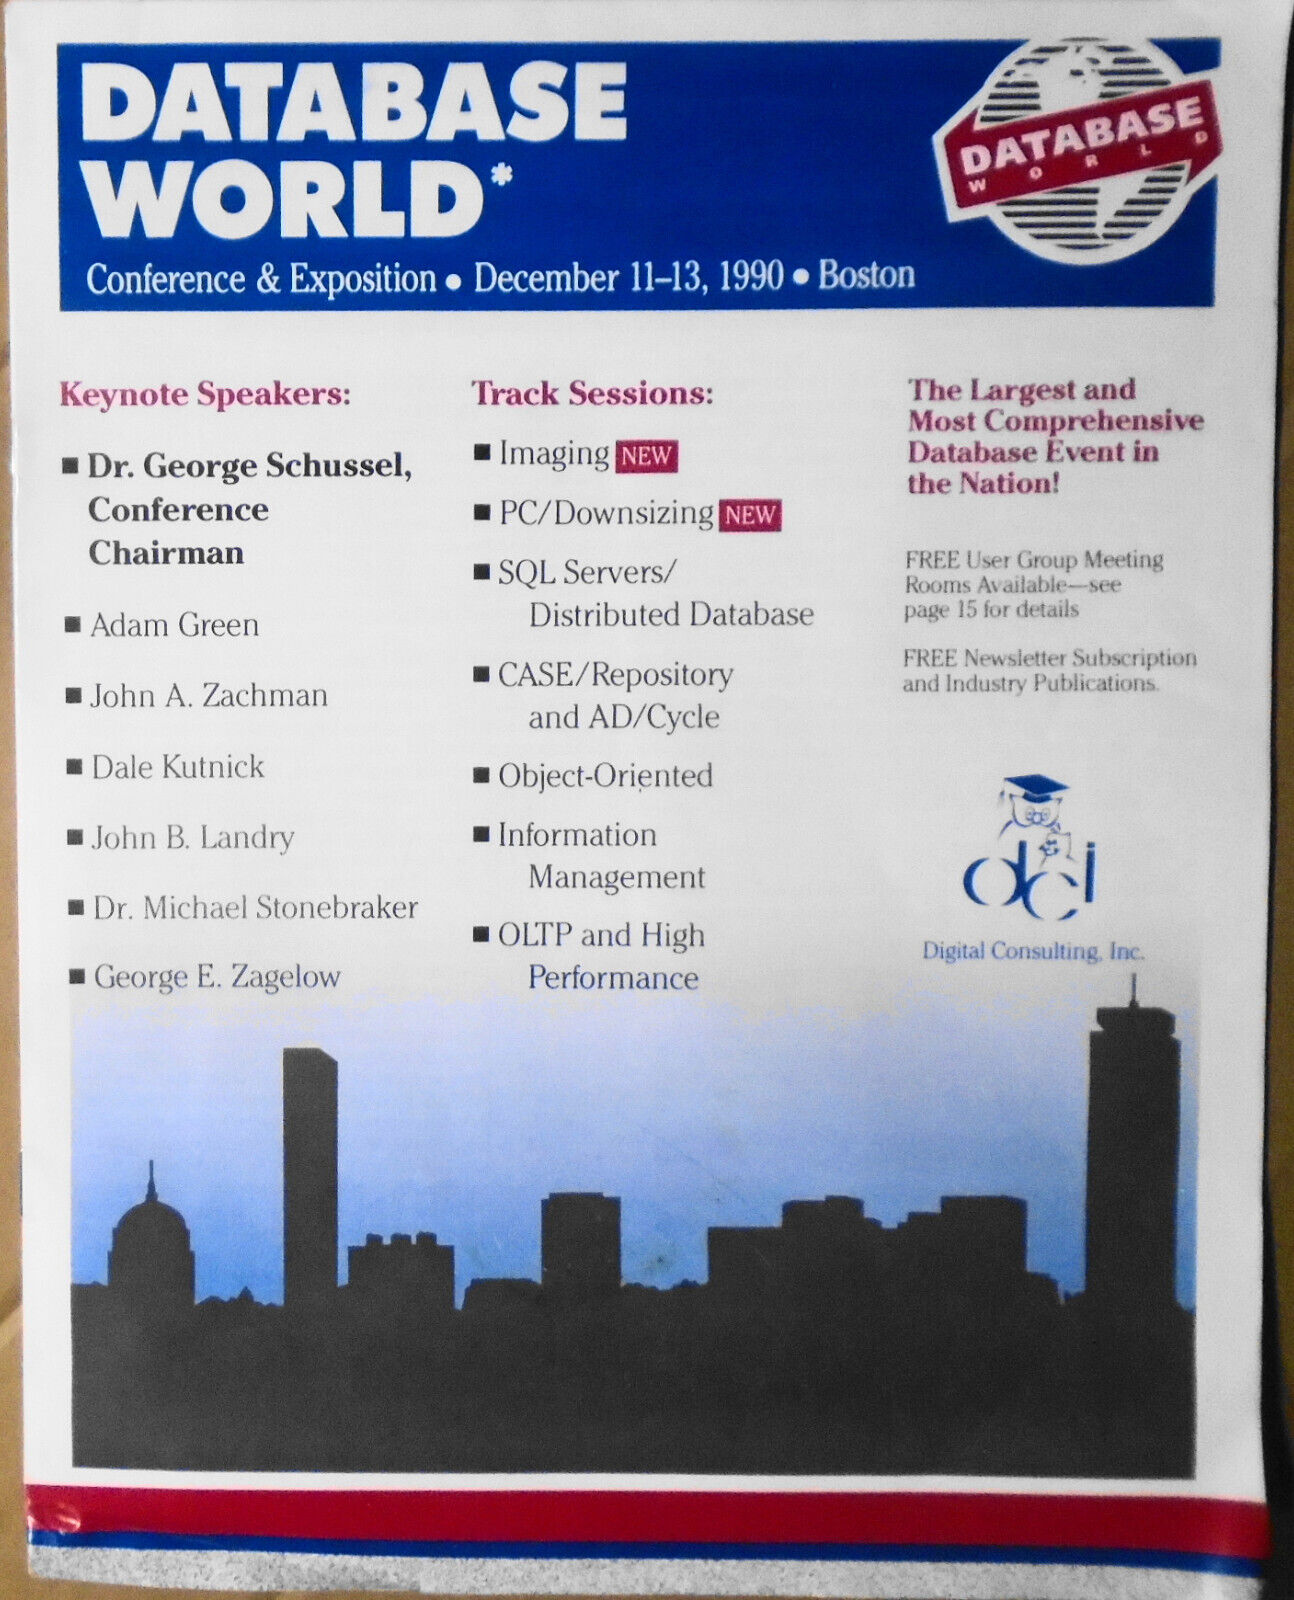 Database World Conference & Expo Program, December 11-13, 1990, Boston, MA.